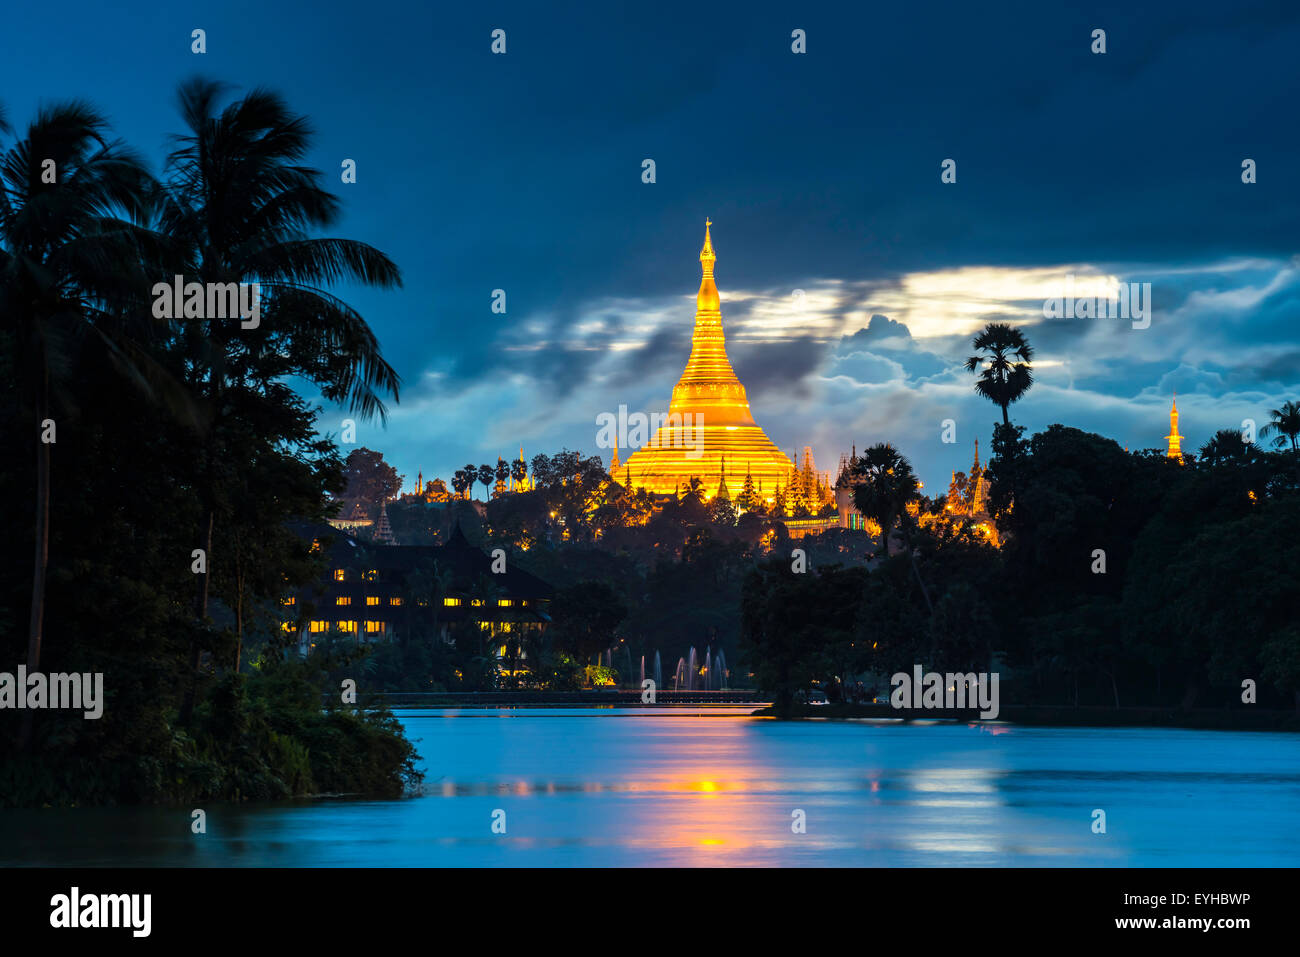 Golden main stupa at dusk, chedi, Shwedagon Pagoda, Kandawgyi Lake, Kandawgyi Nature Park, Yangon or Rangoon, Yangon Region Stock Photo